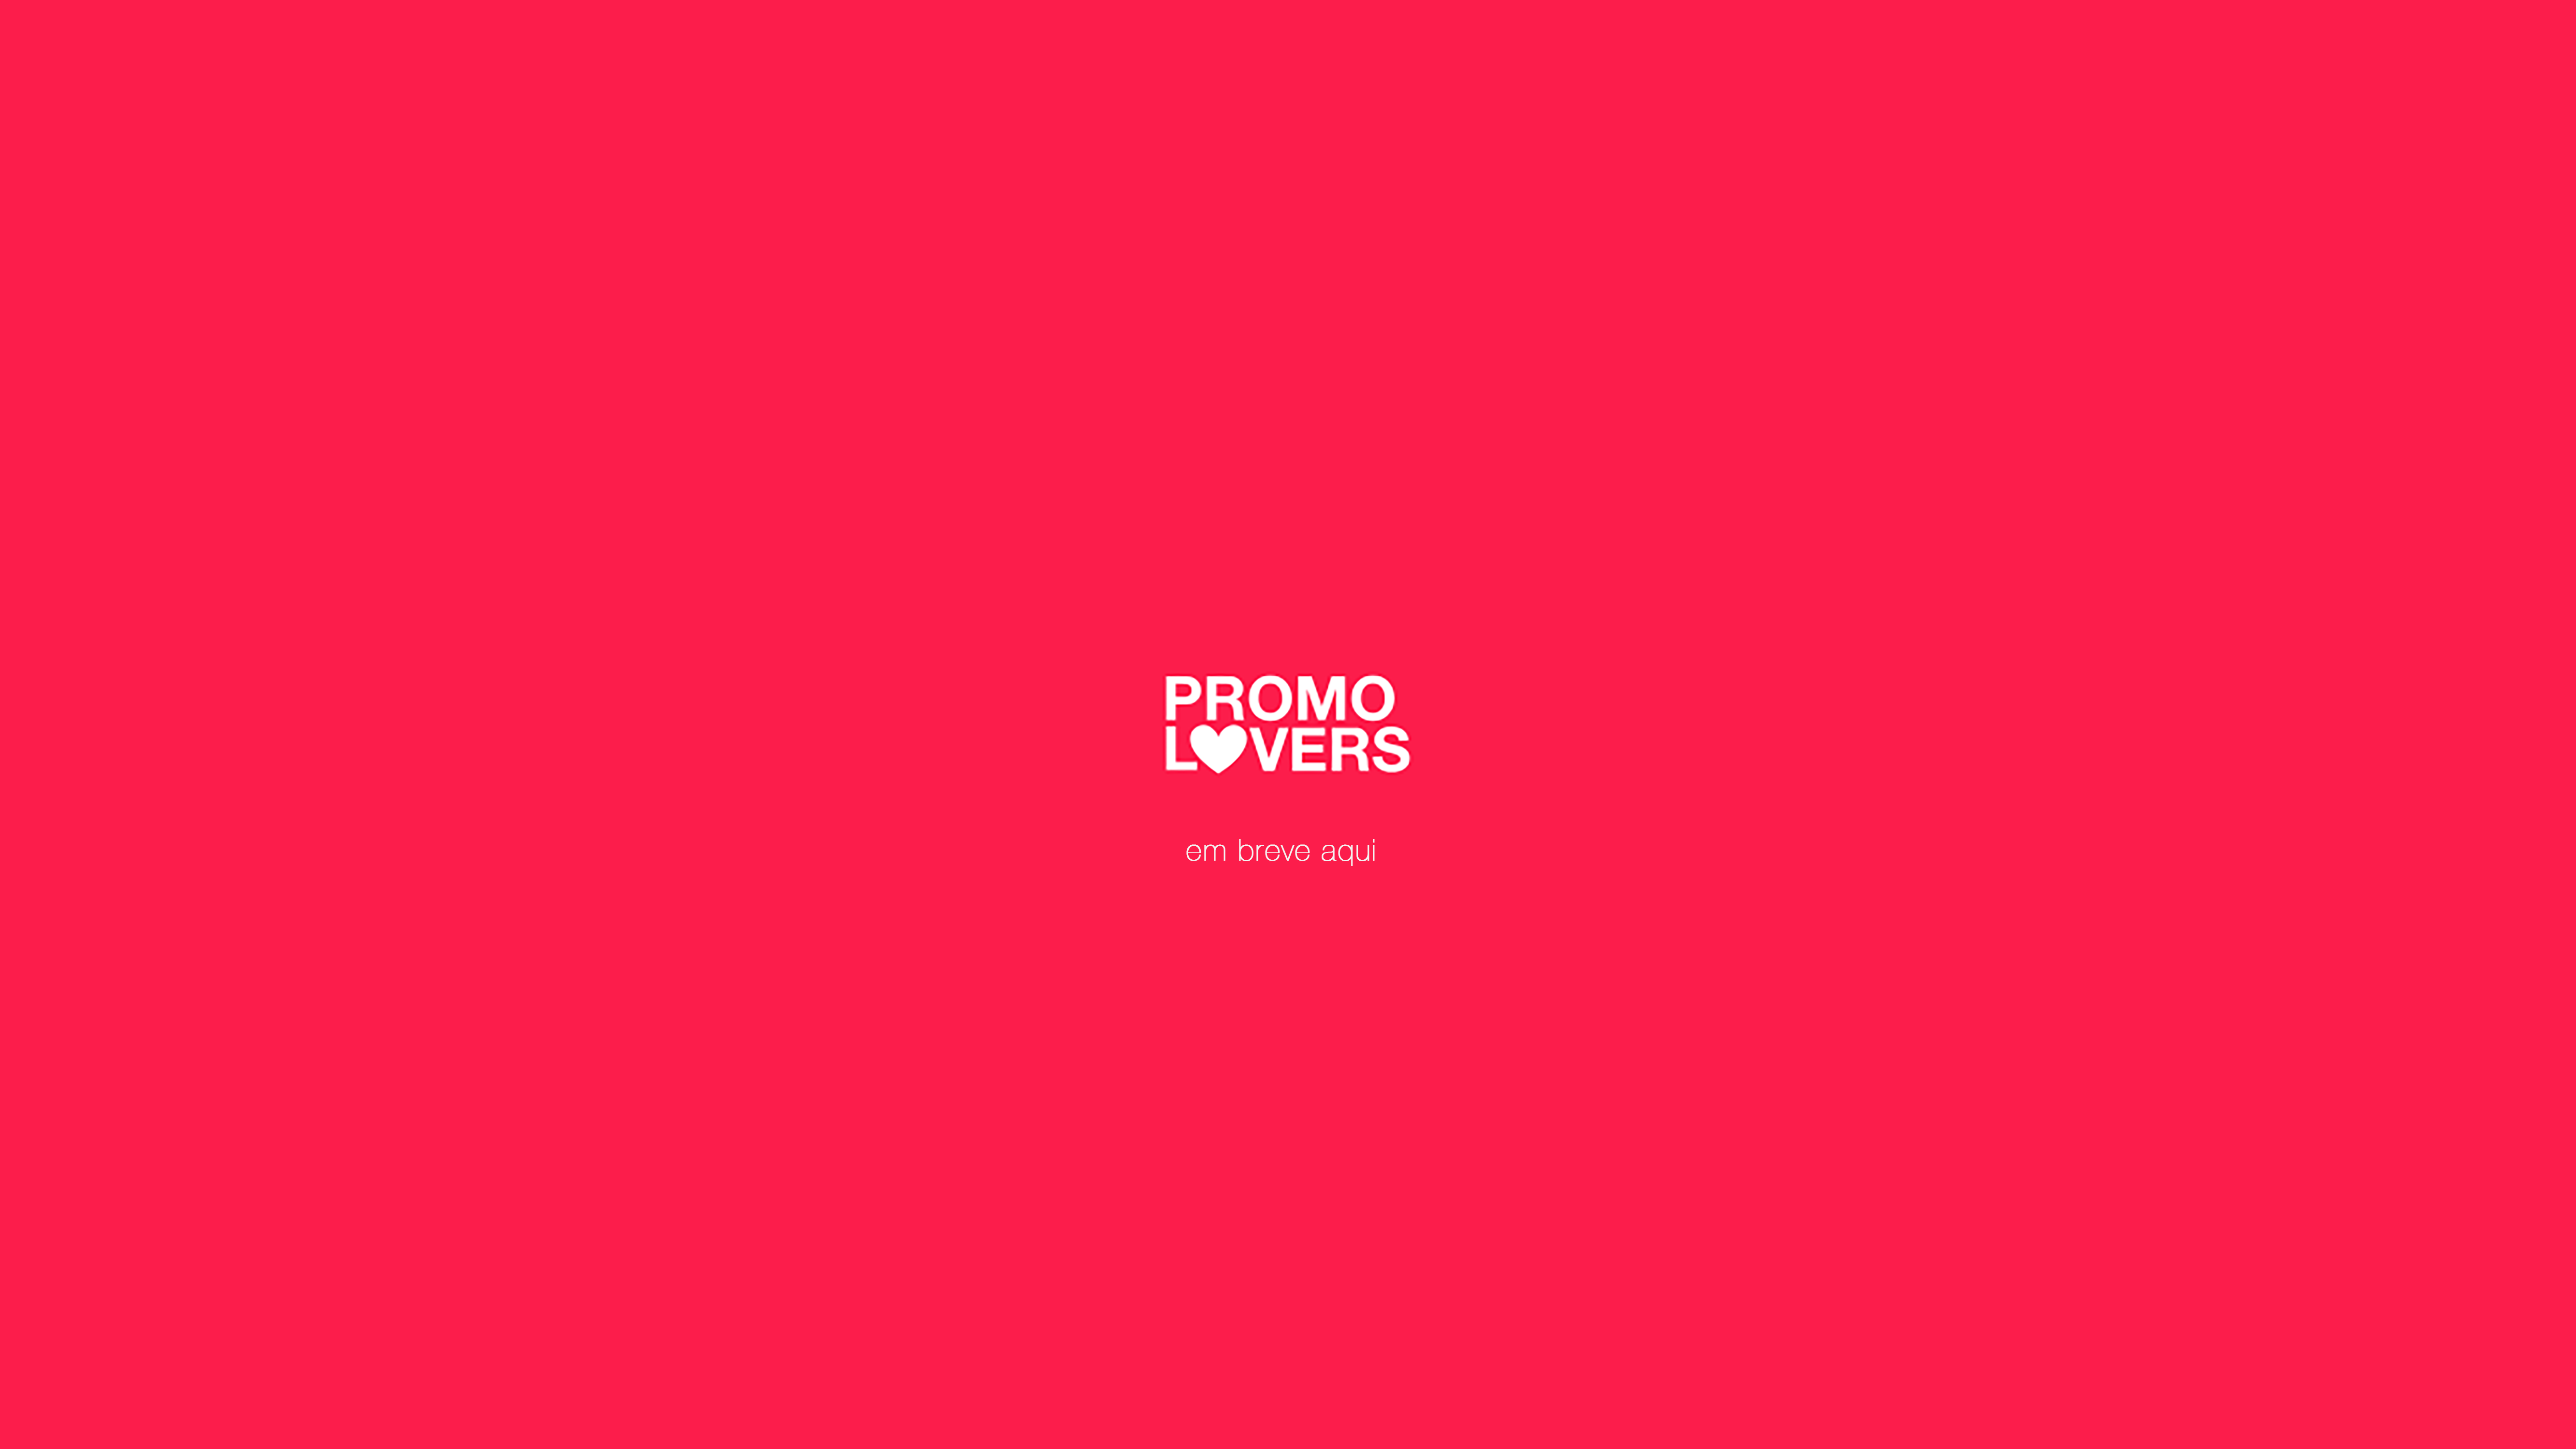 Promo Logo